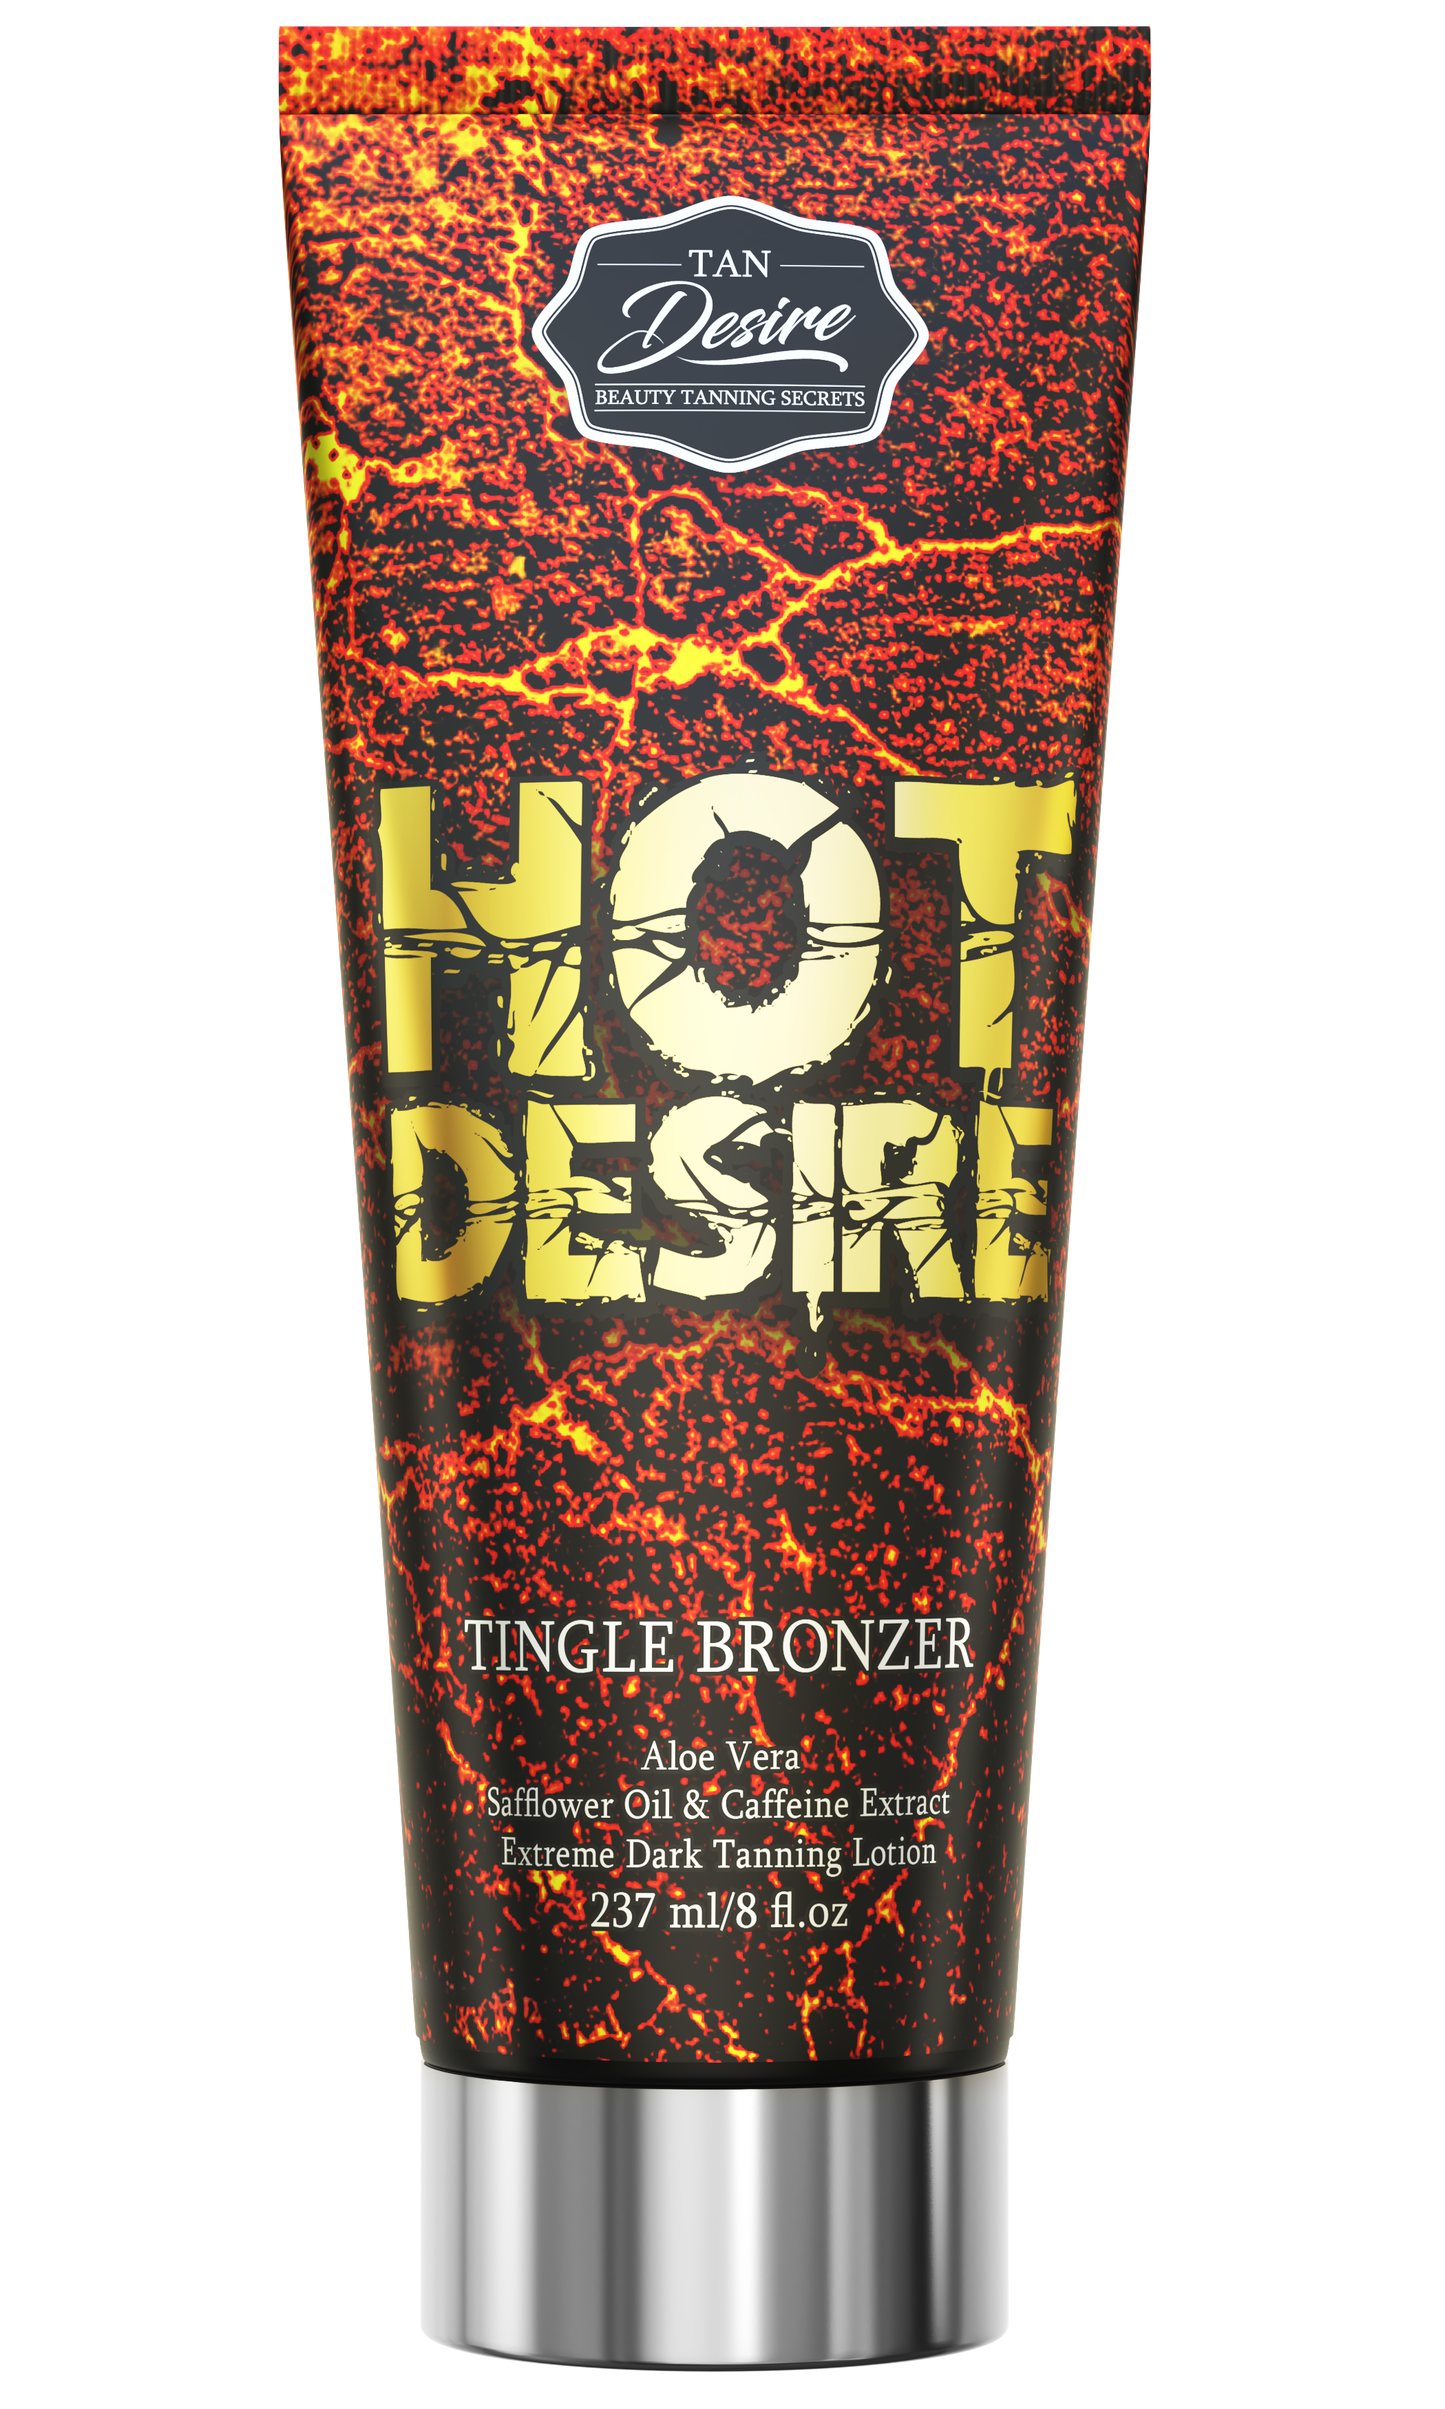 Hot Desire